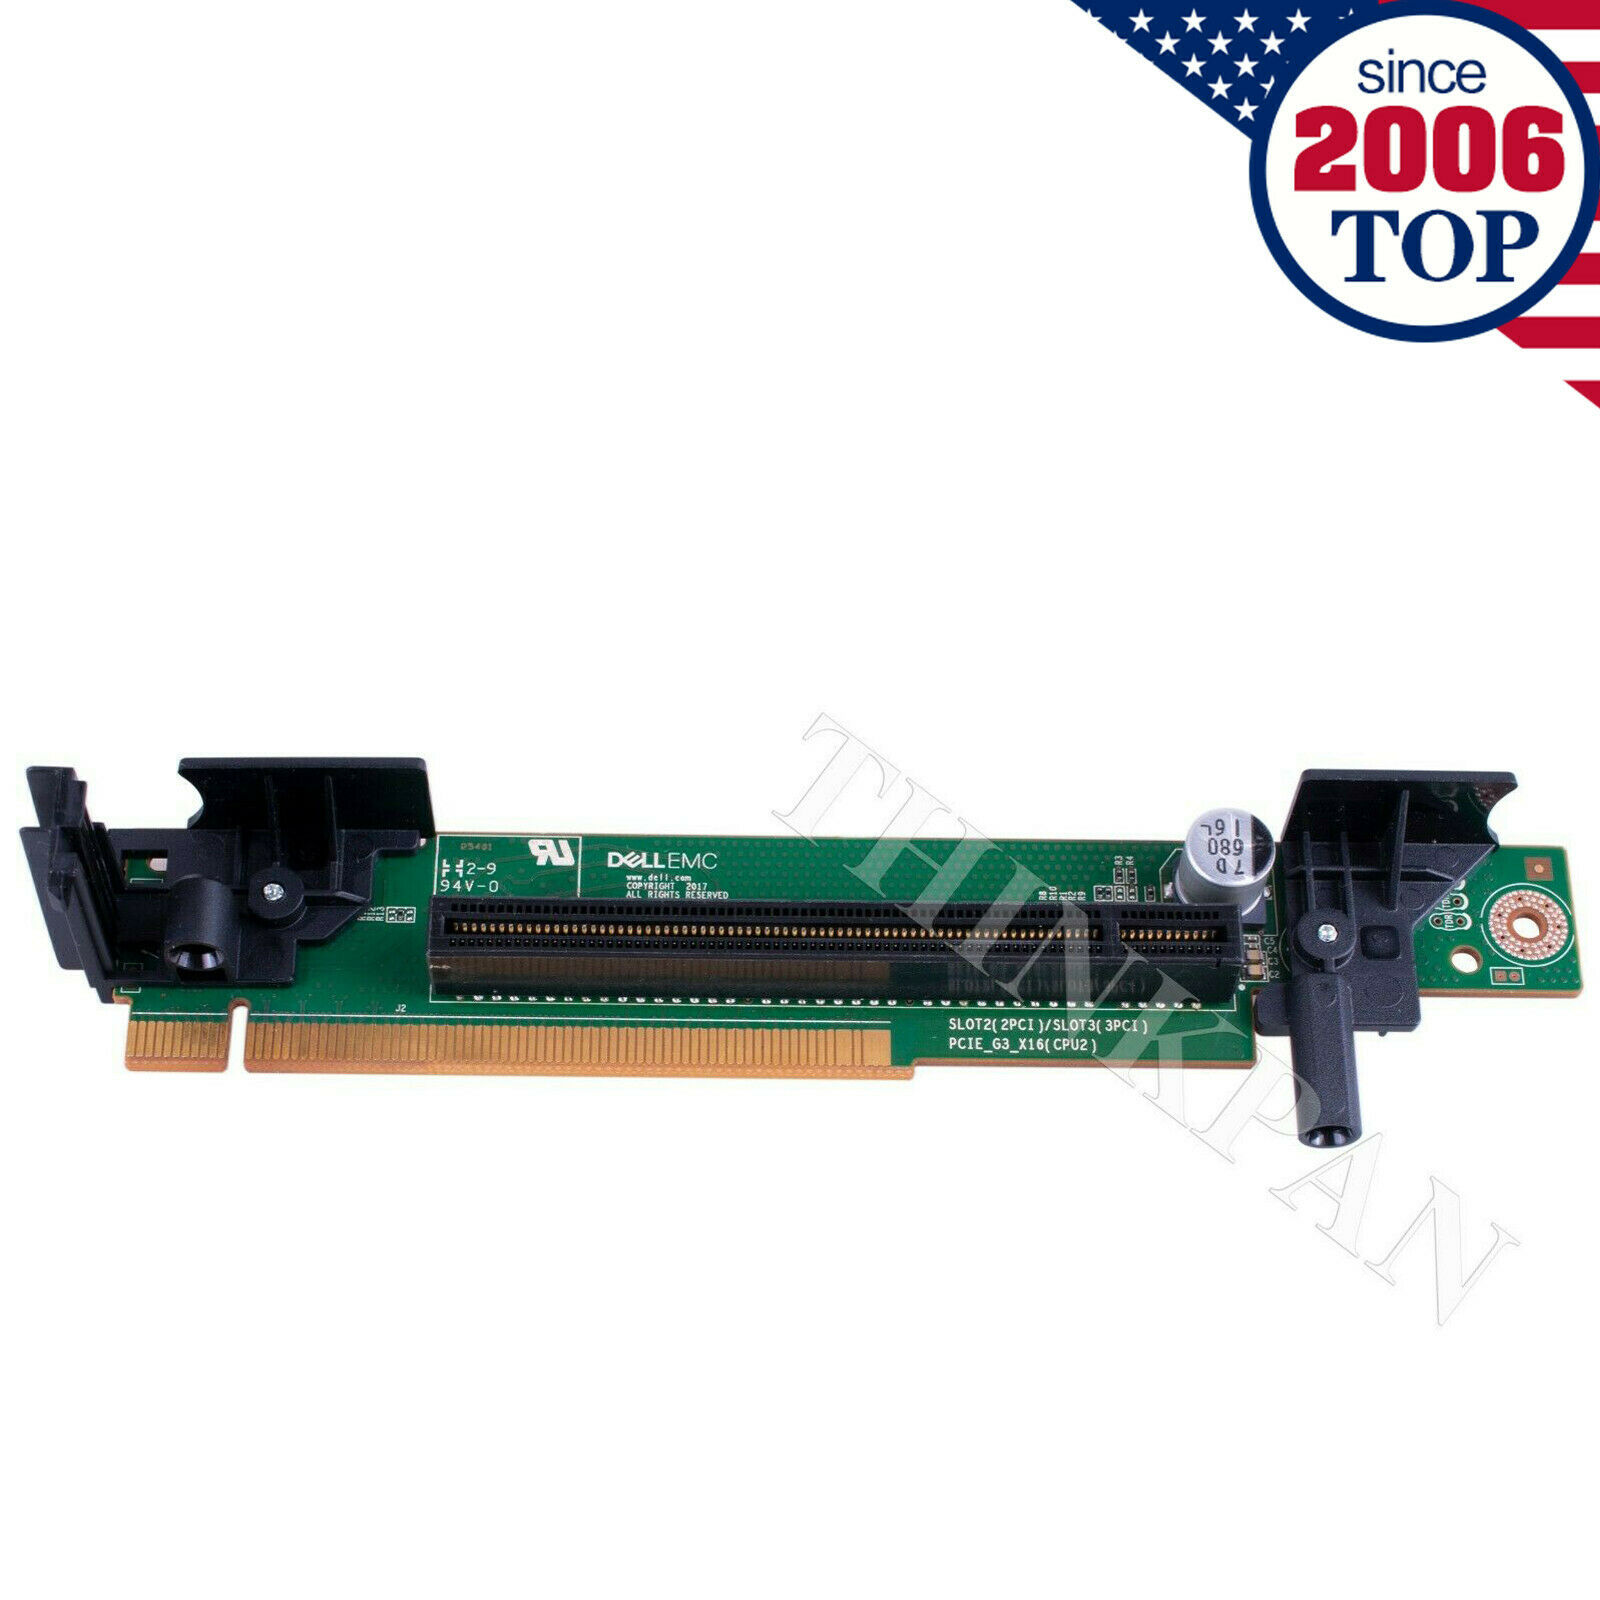 New Dell PowerEdge R640 Riser 2 Card PCI-E X16 for 2nd CPU W6D08 P7RRD US